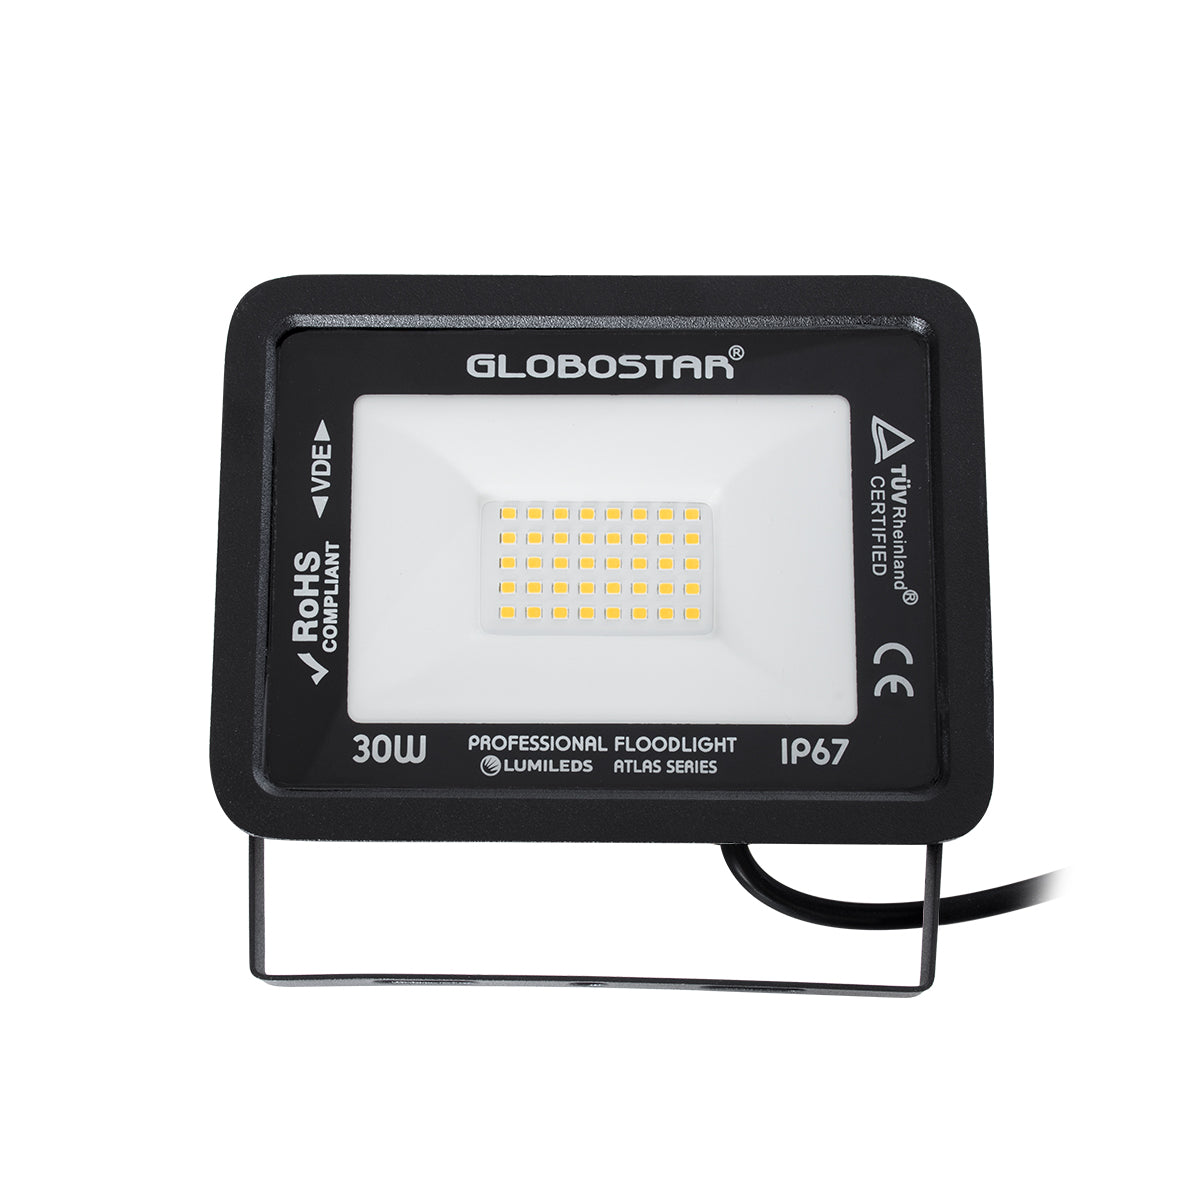 GloboStar® ATLAS 61418 Επαγγελματικός Προβολέας LED 30W 3450lm 120° AC 220-240V - Αδιάβροχος IP67 - Μ16 x Π2.5 x Υ12.5cm - Μαύρο - Θερμό Λευκό 2700K - LUMILEDS Chips - TÜV Rheinland Certified - 5 Years Warranty